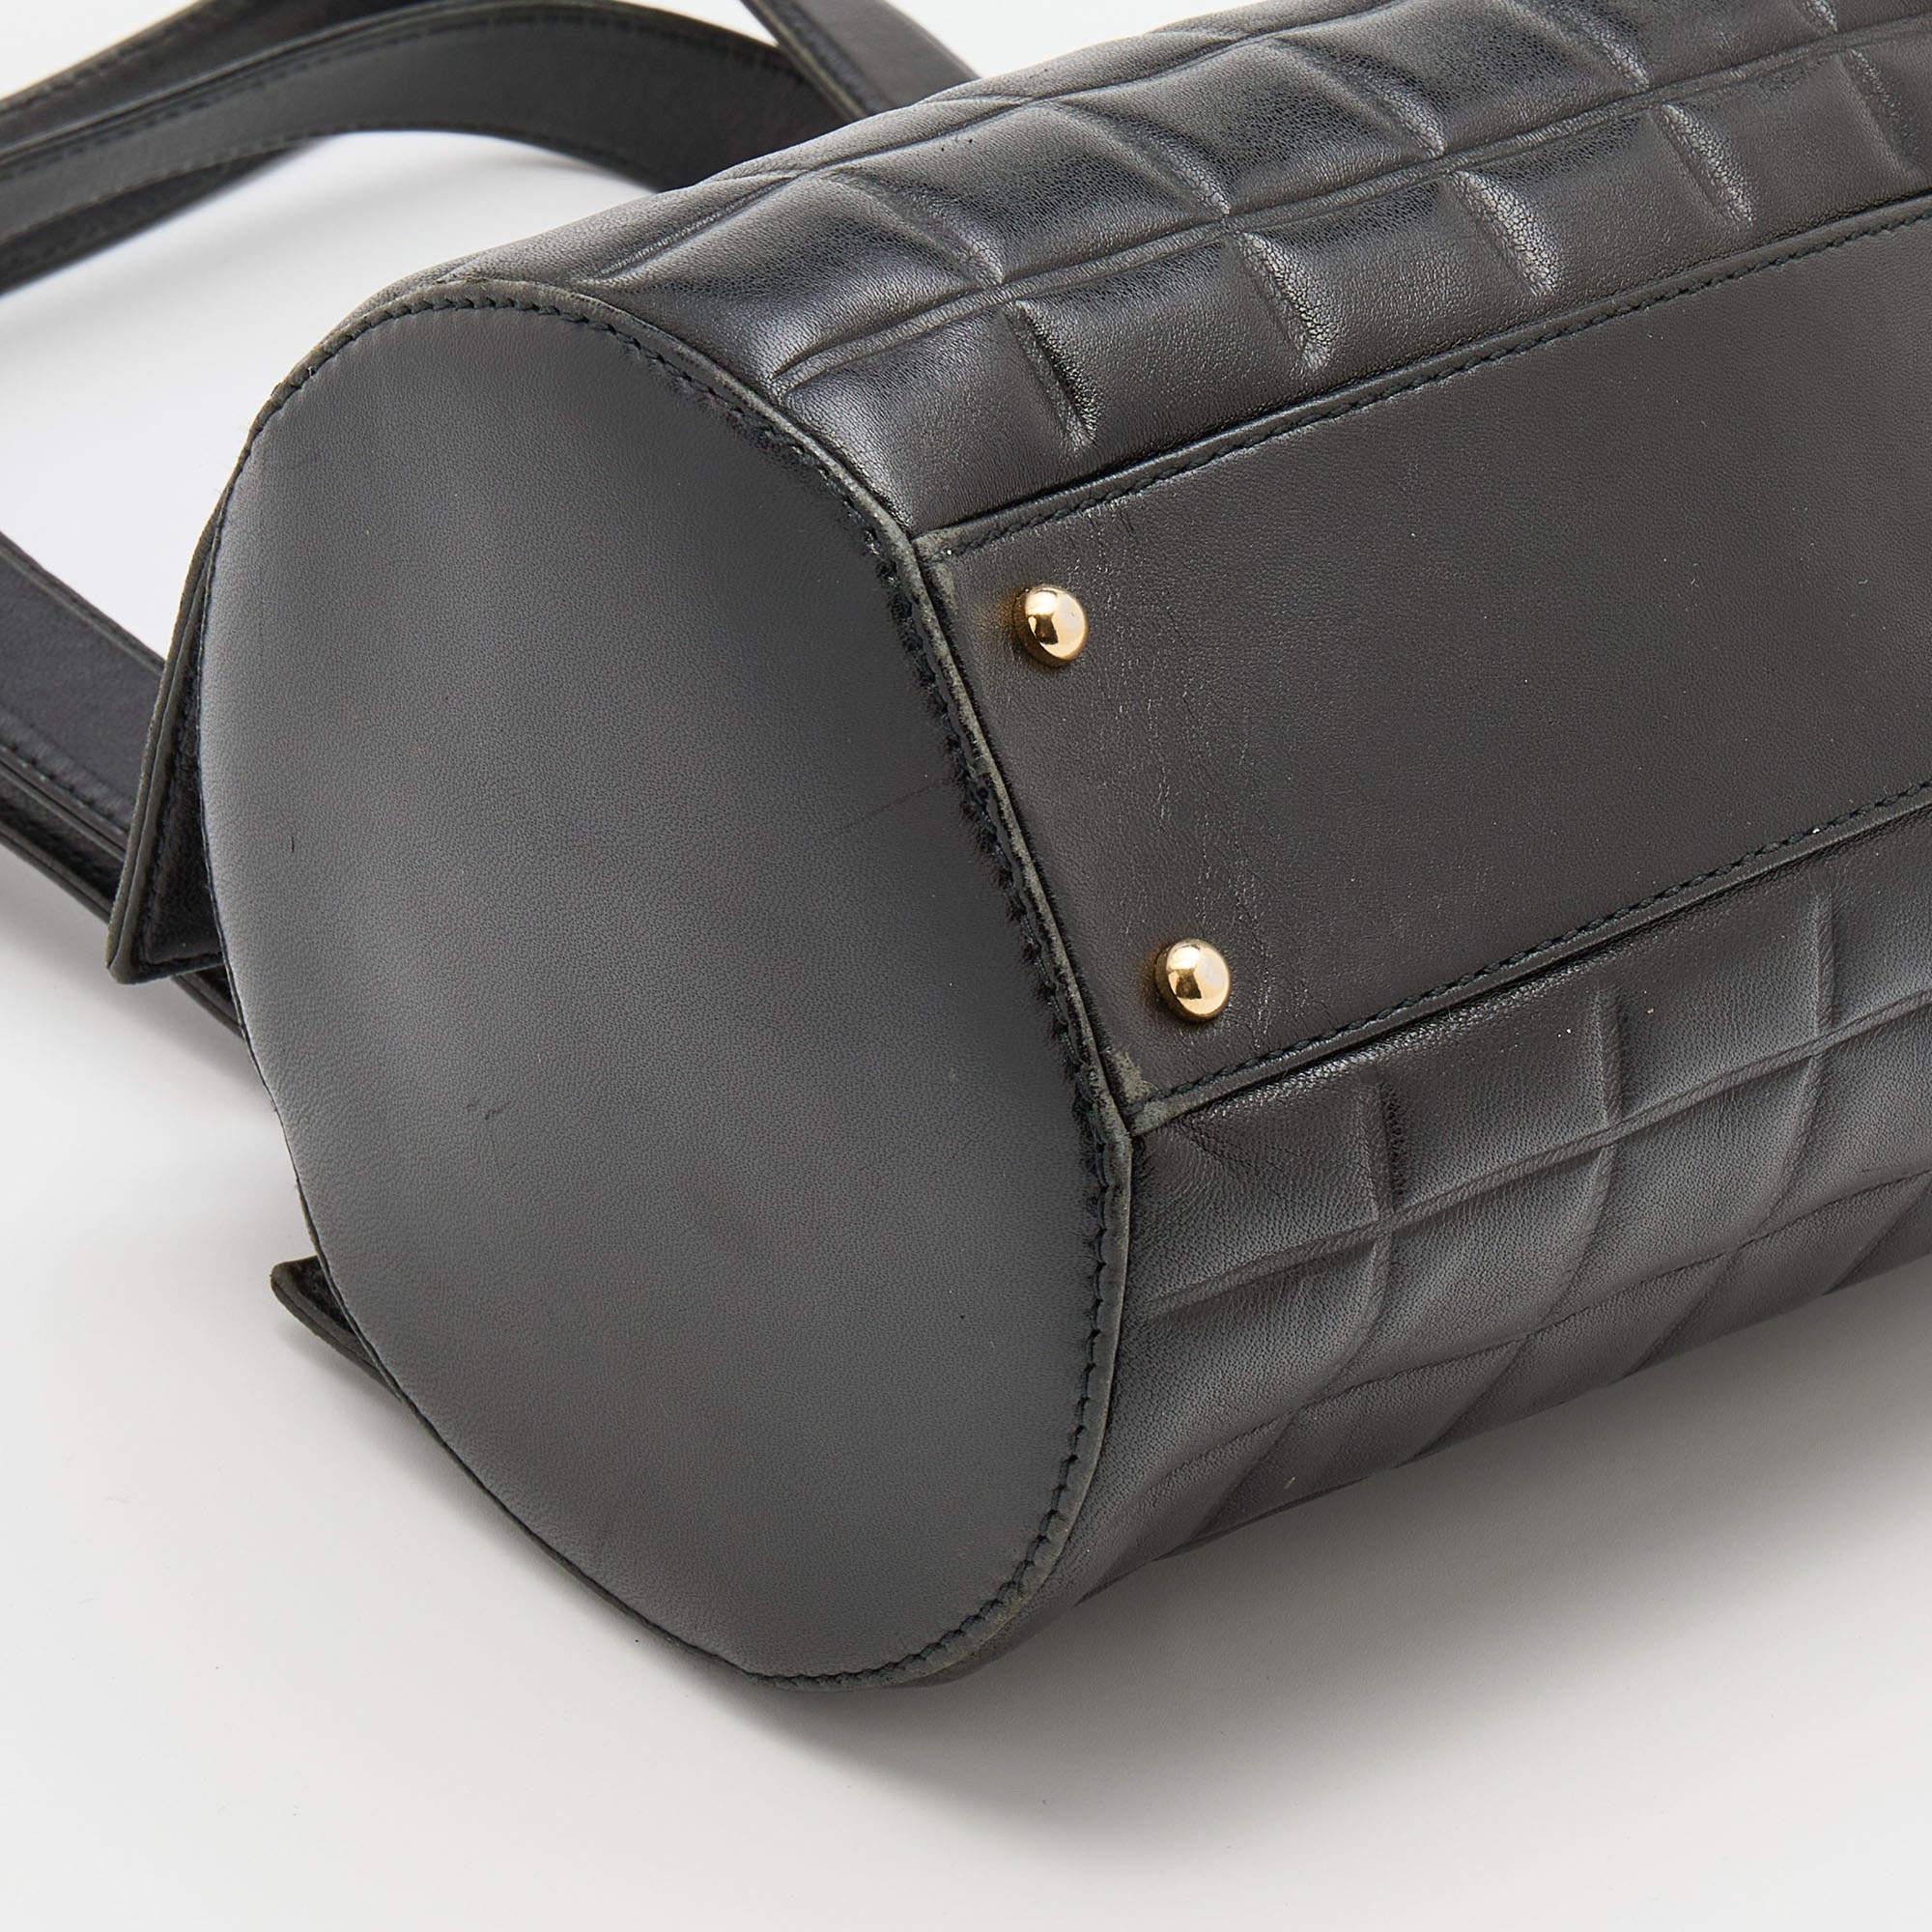 Chanel Black Leather Chocolate Bar Barrel Bag 4